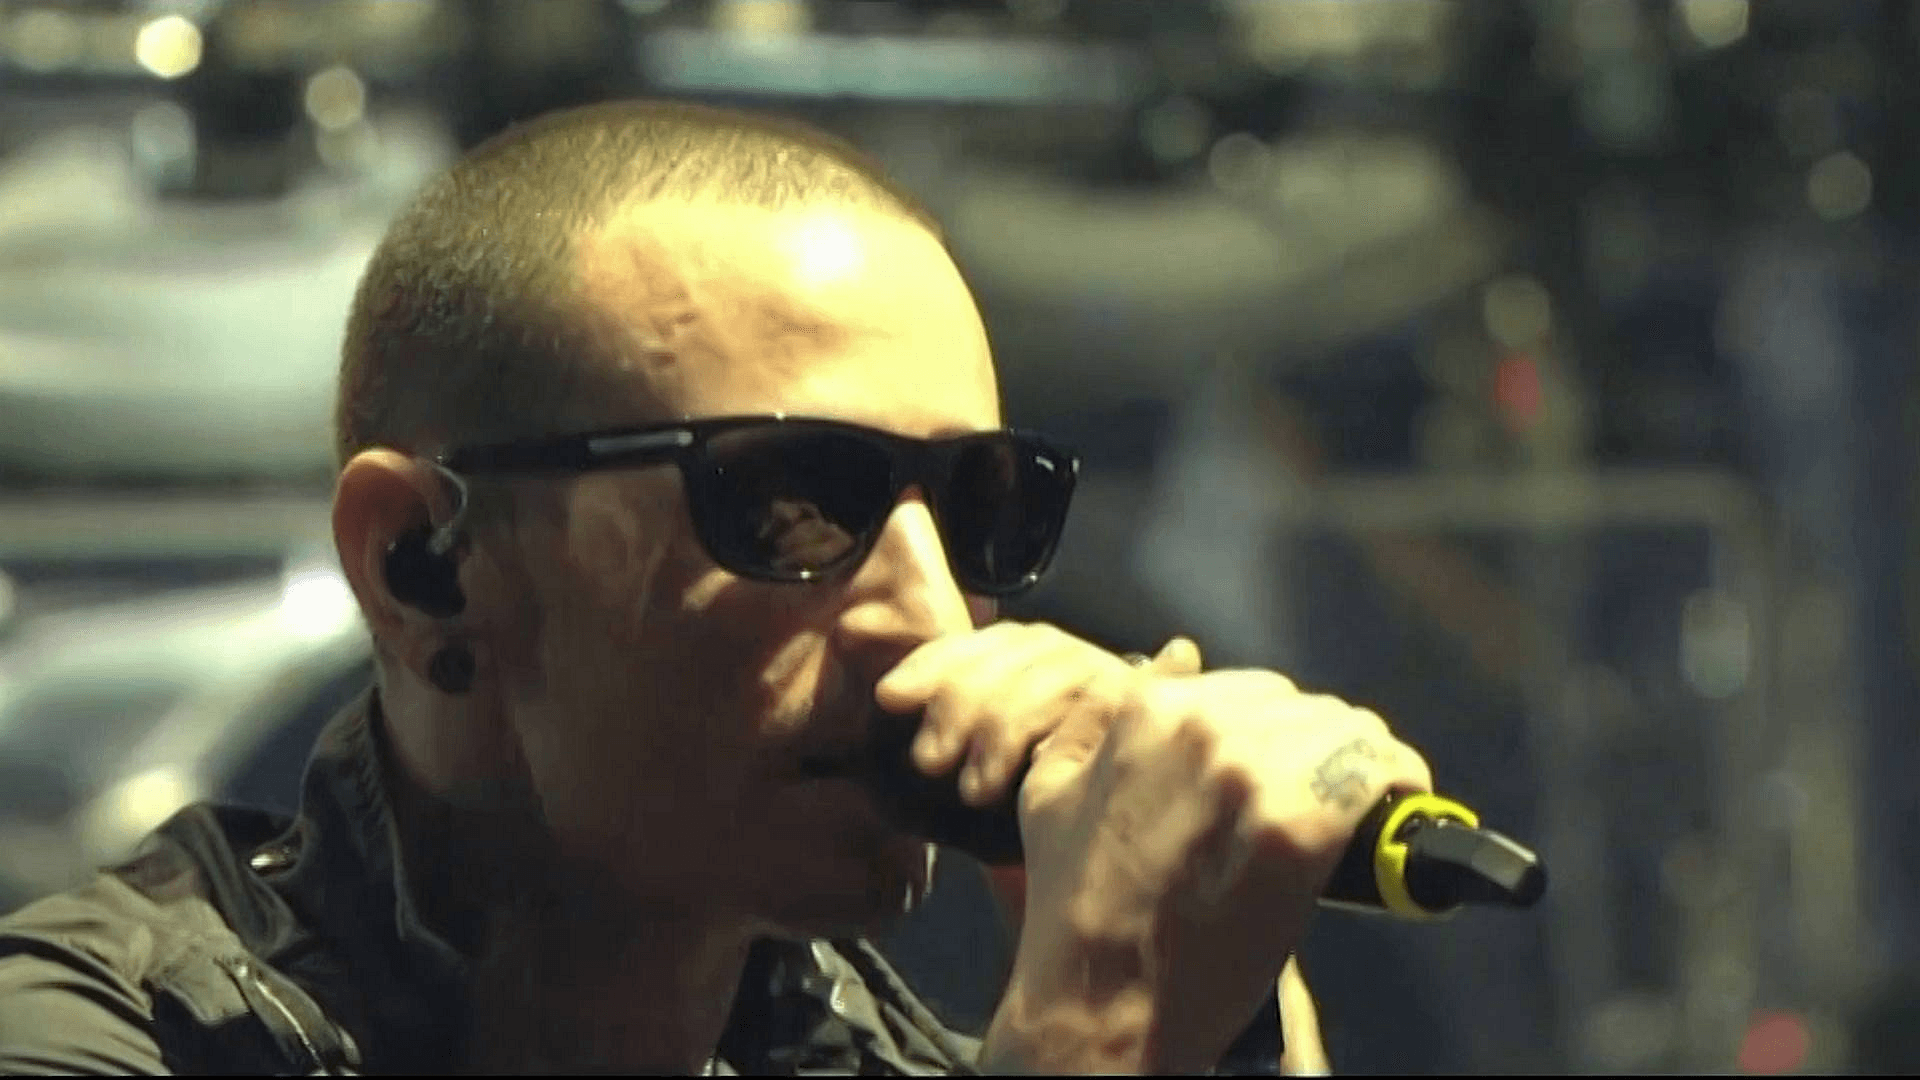 Linkin Park - Live in New York